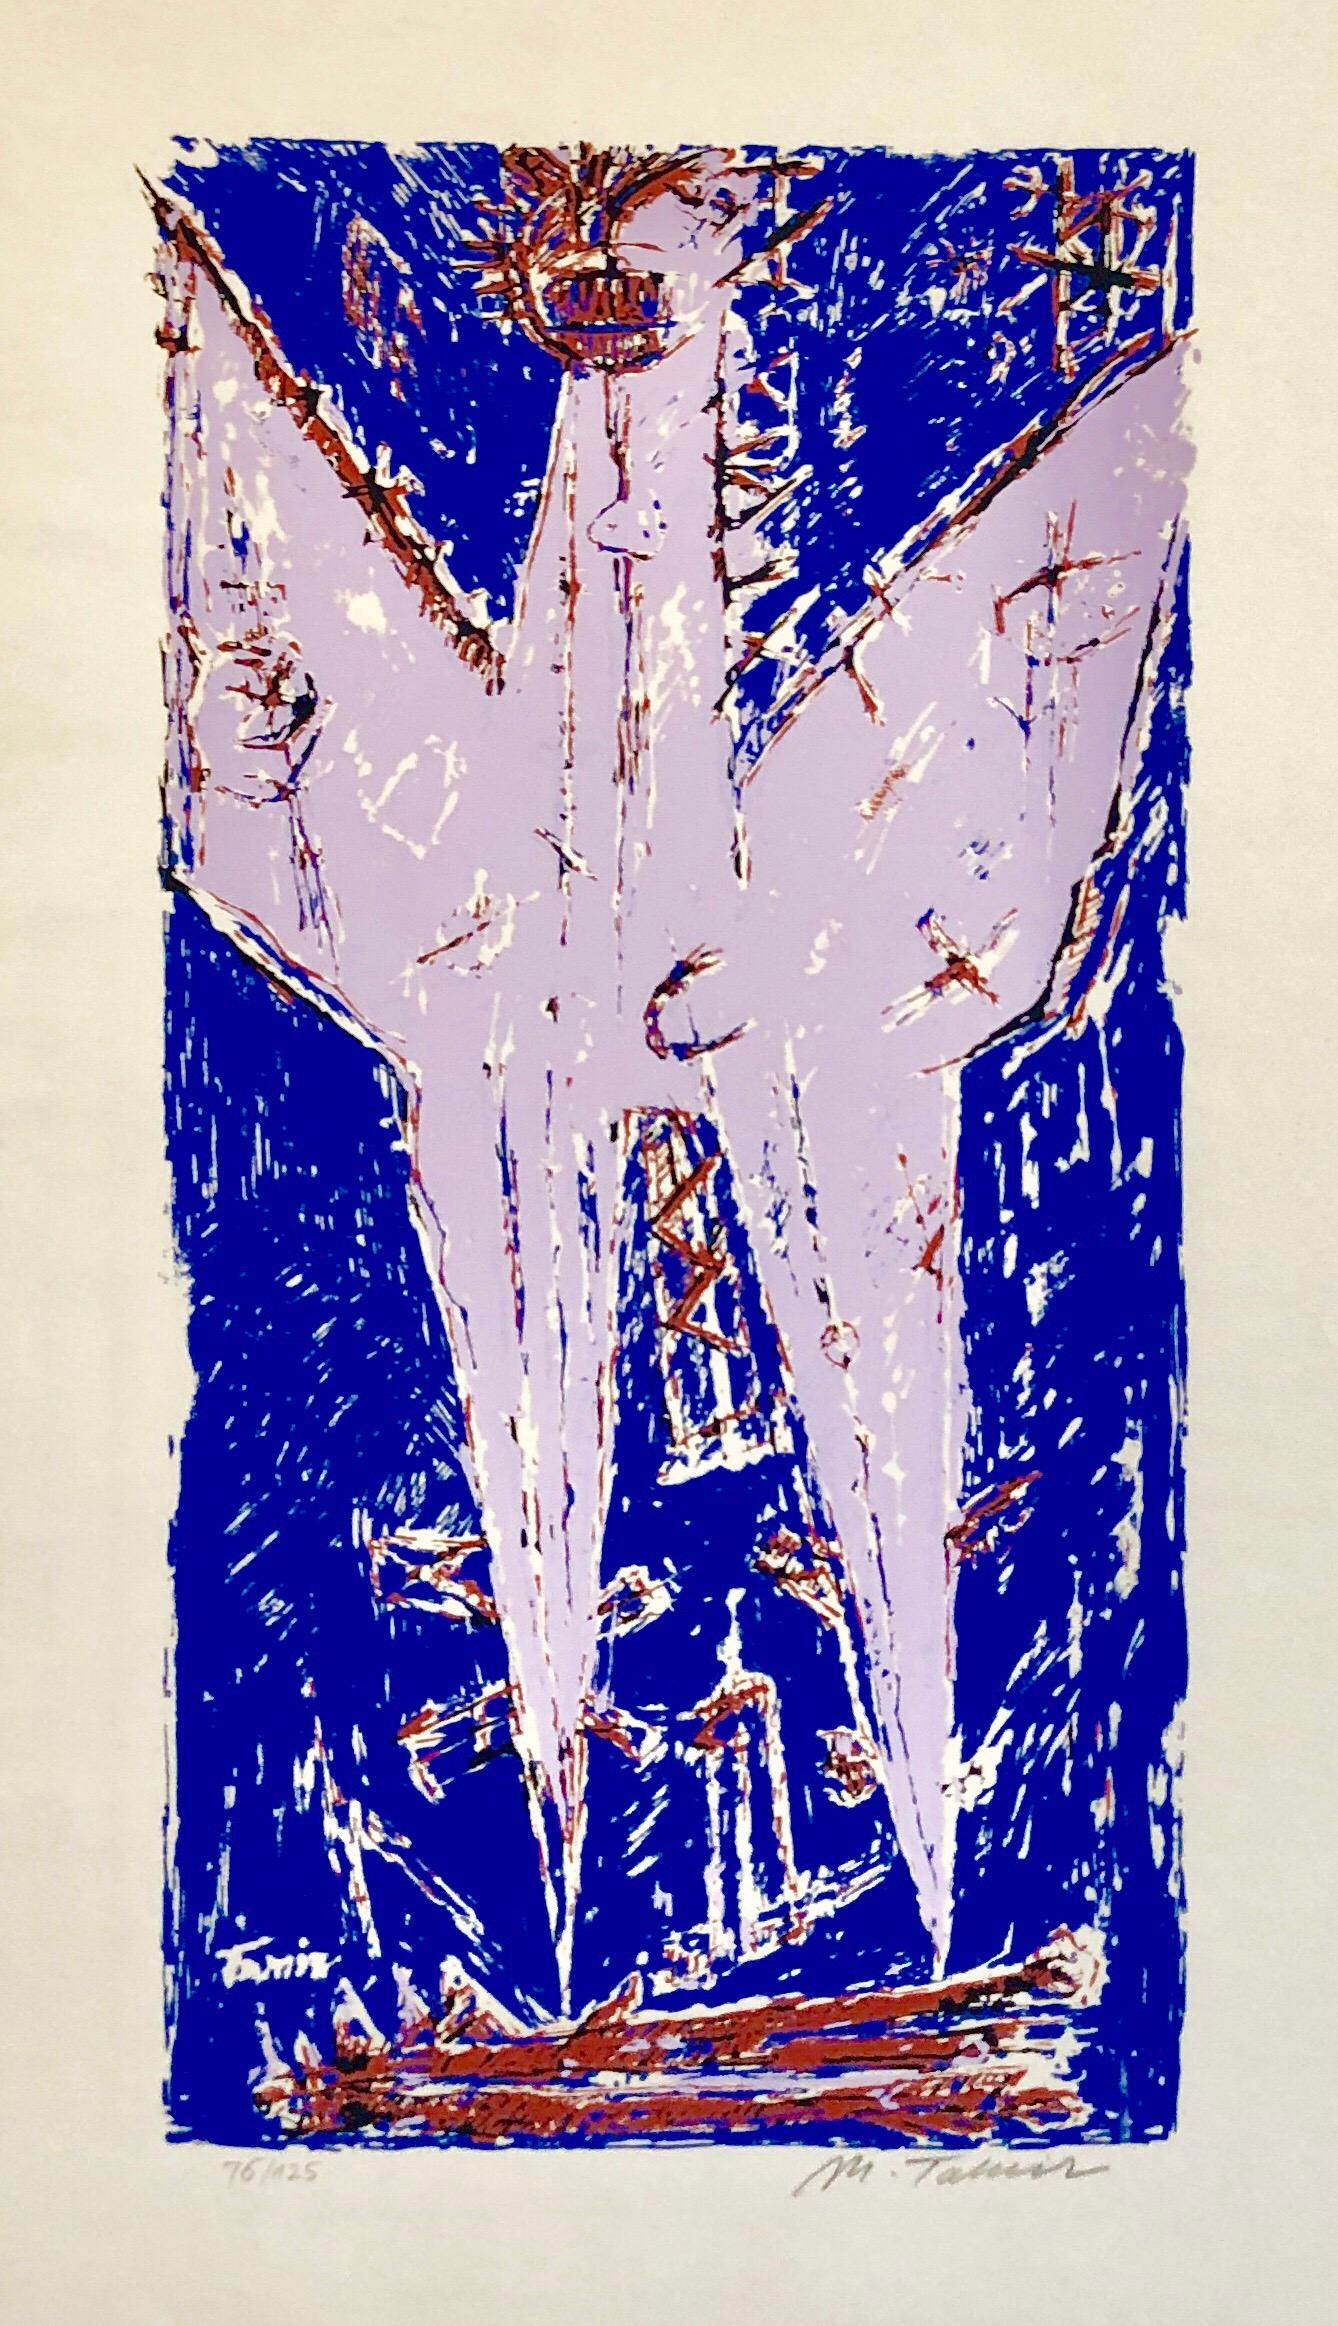 Abstract Composition, 1959 Silkscreen Lithograph "Phoenix".
This was from a portfolio which included works by Yosl Bergner, Menashe Kadishman, Yosef Zaritsky, Aharon Kahana, Jacob Wexler, Moshe Tamir and Michael Gross.

Moshe Tamir (Hebrew: משה